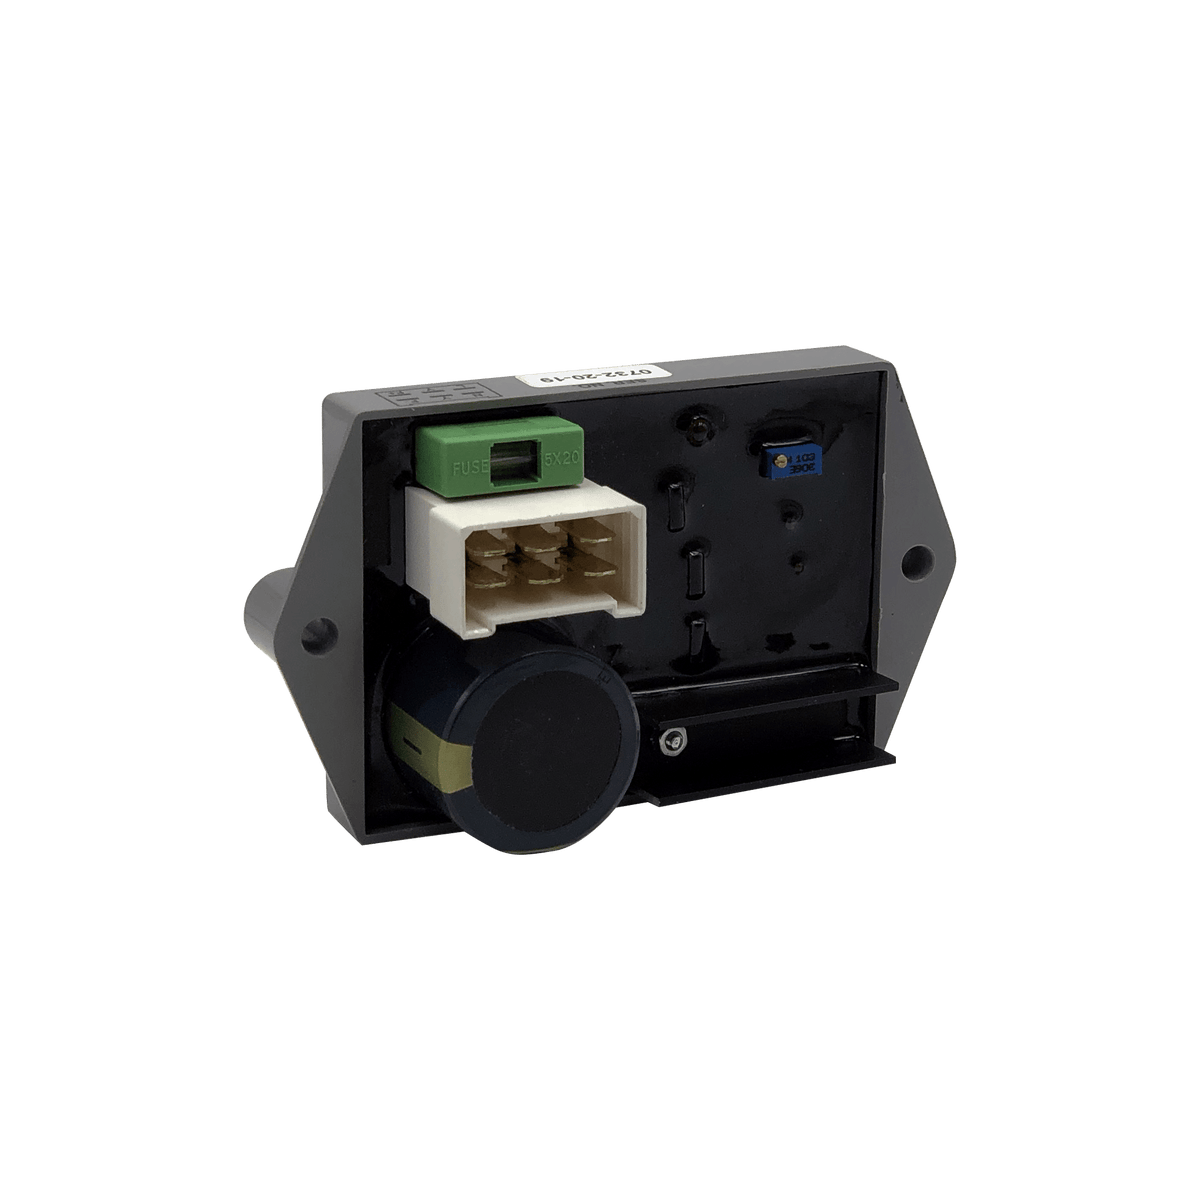 2.1 Voltage Regulator for Brush Mobile Generator